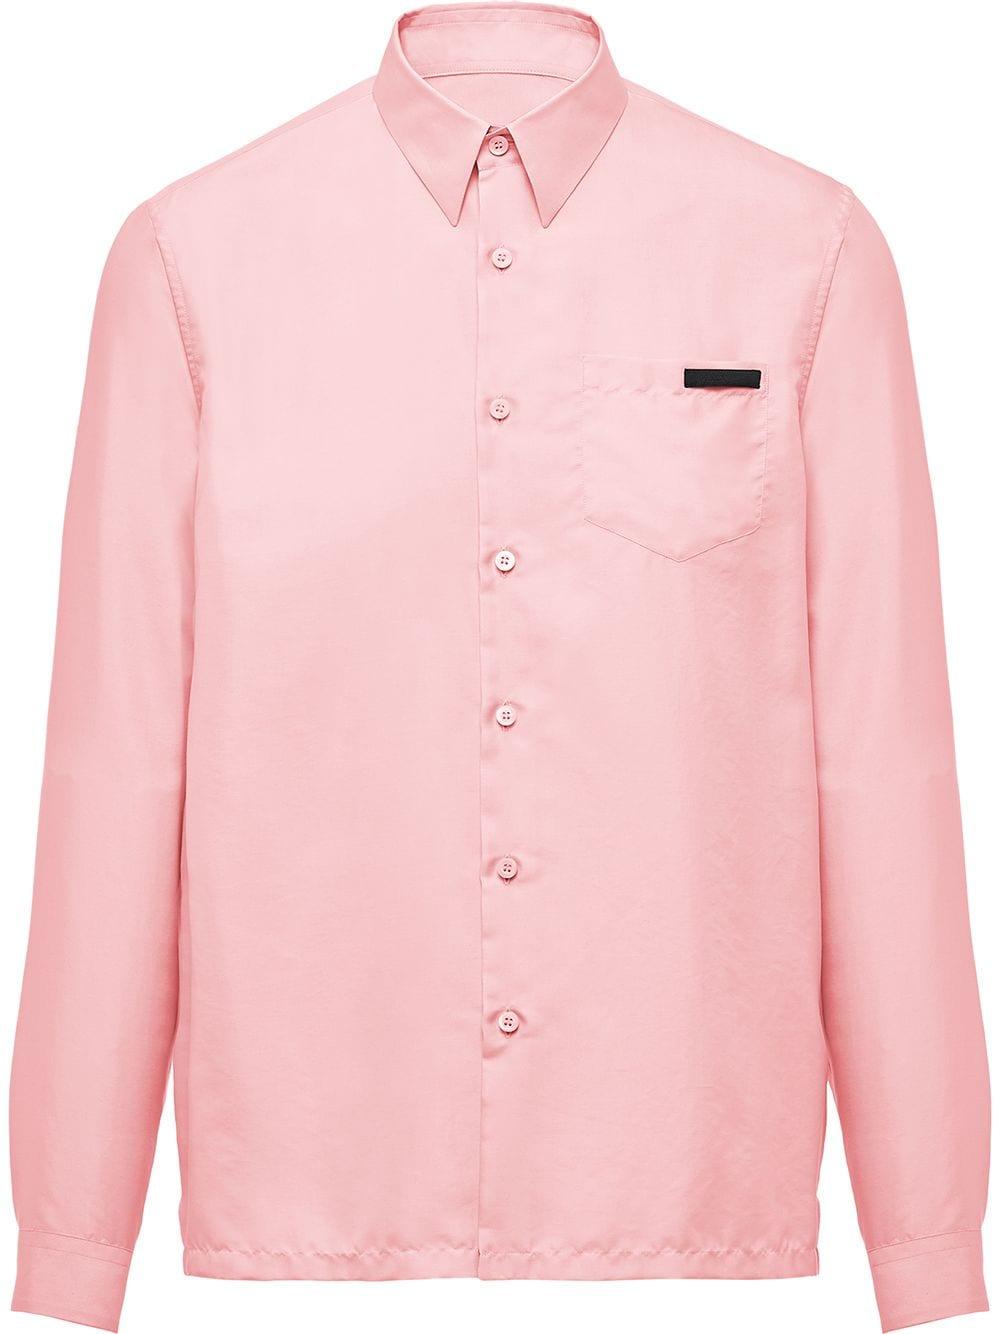 Prada Silk Classic-fit Shirt in Pink for Men - Lyst